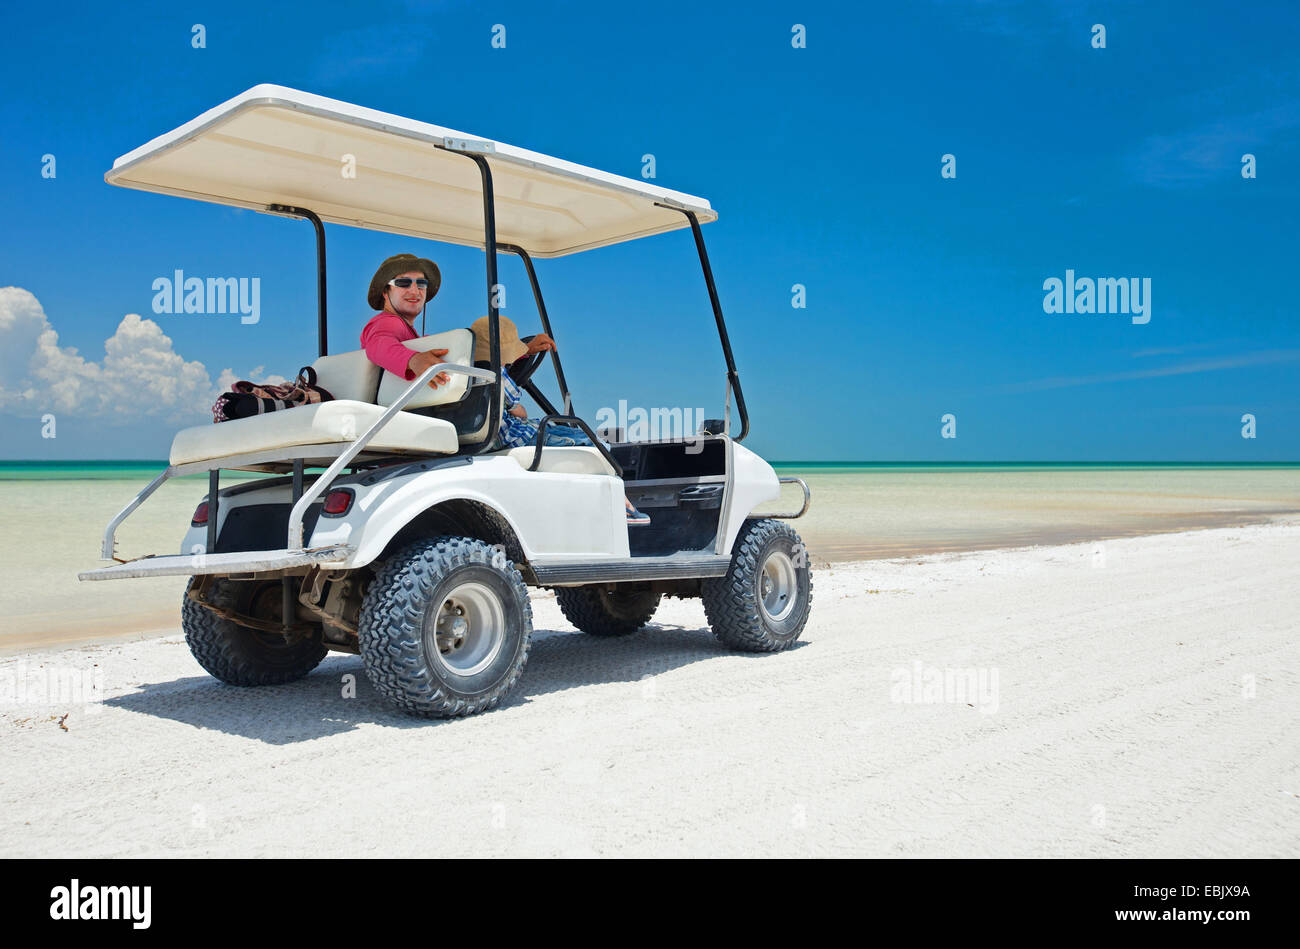 Carrito de golf de playa fotografías e imágenes de alta resolución - Alamy